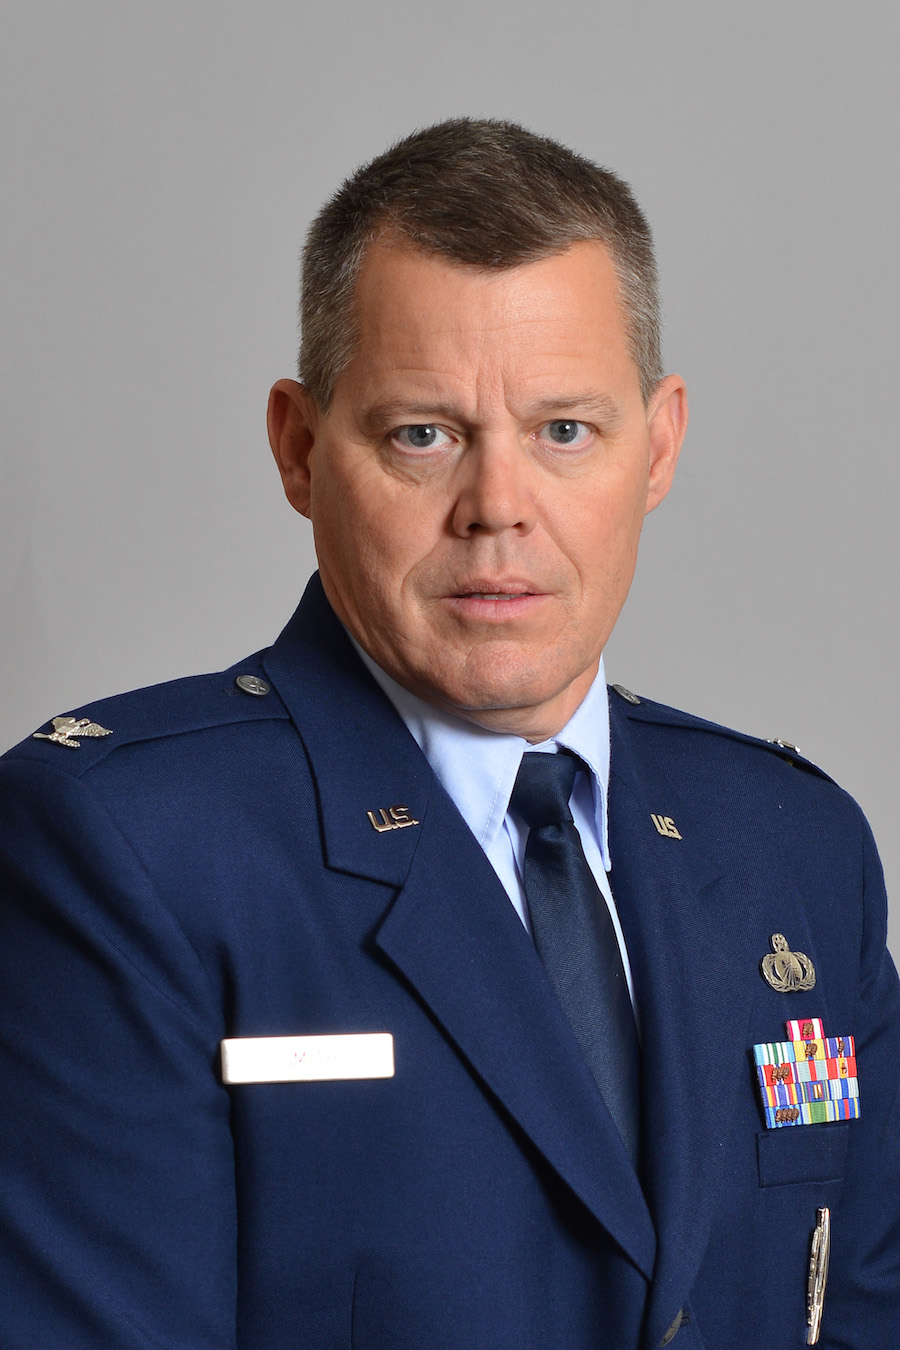 Lt. Col. Jeffrey S. Smith, Ph.D.